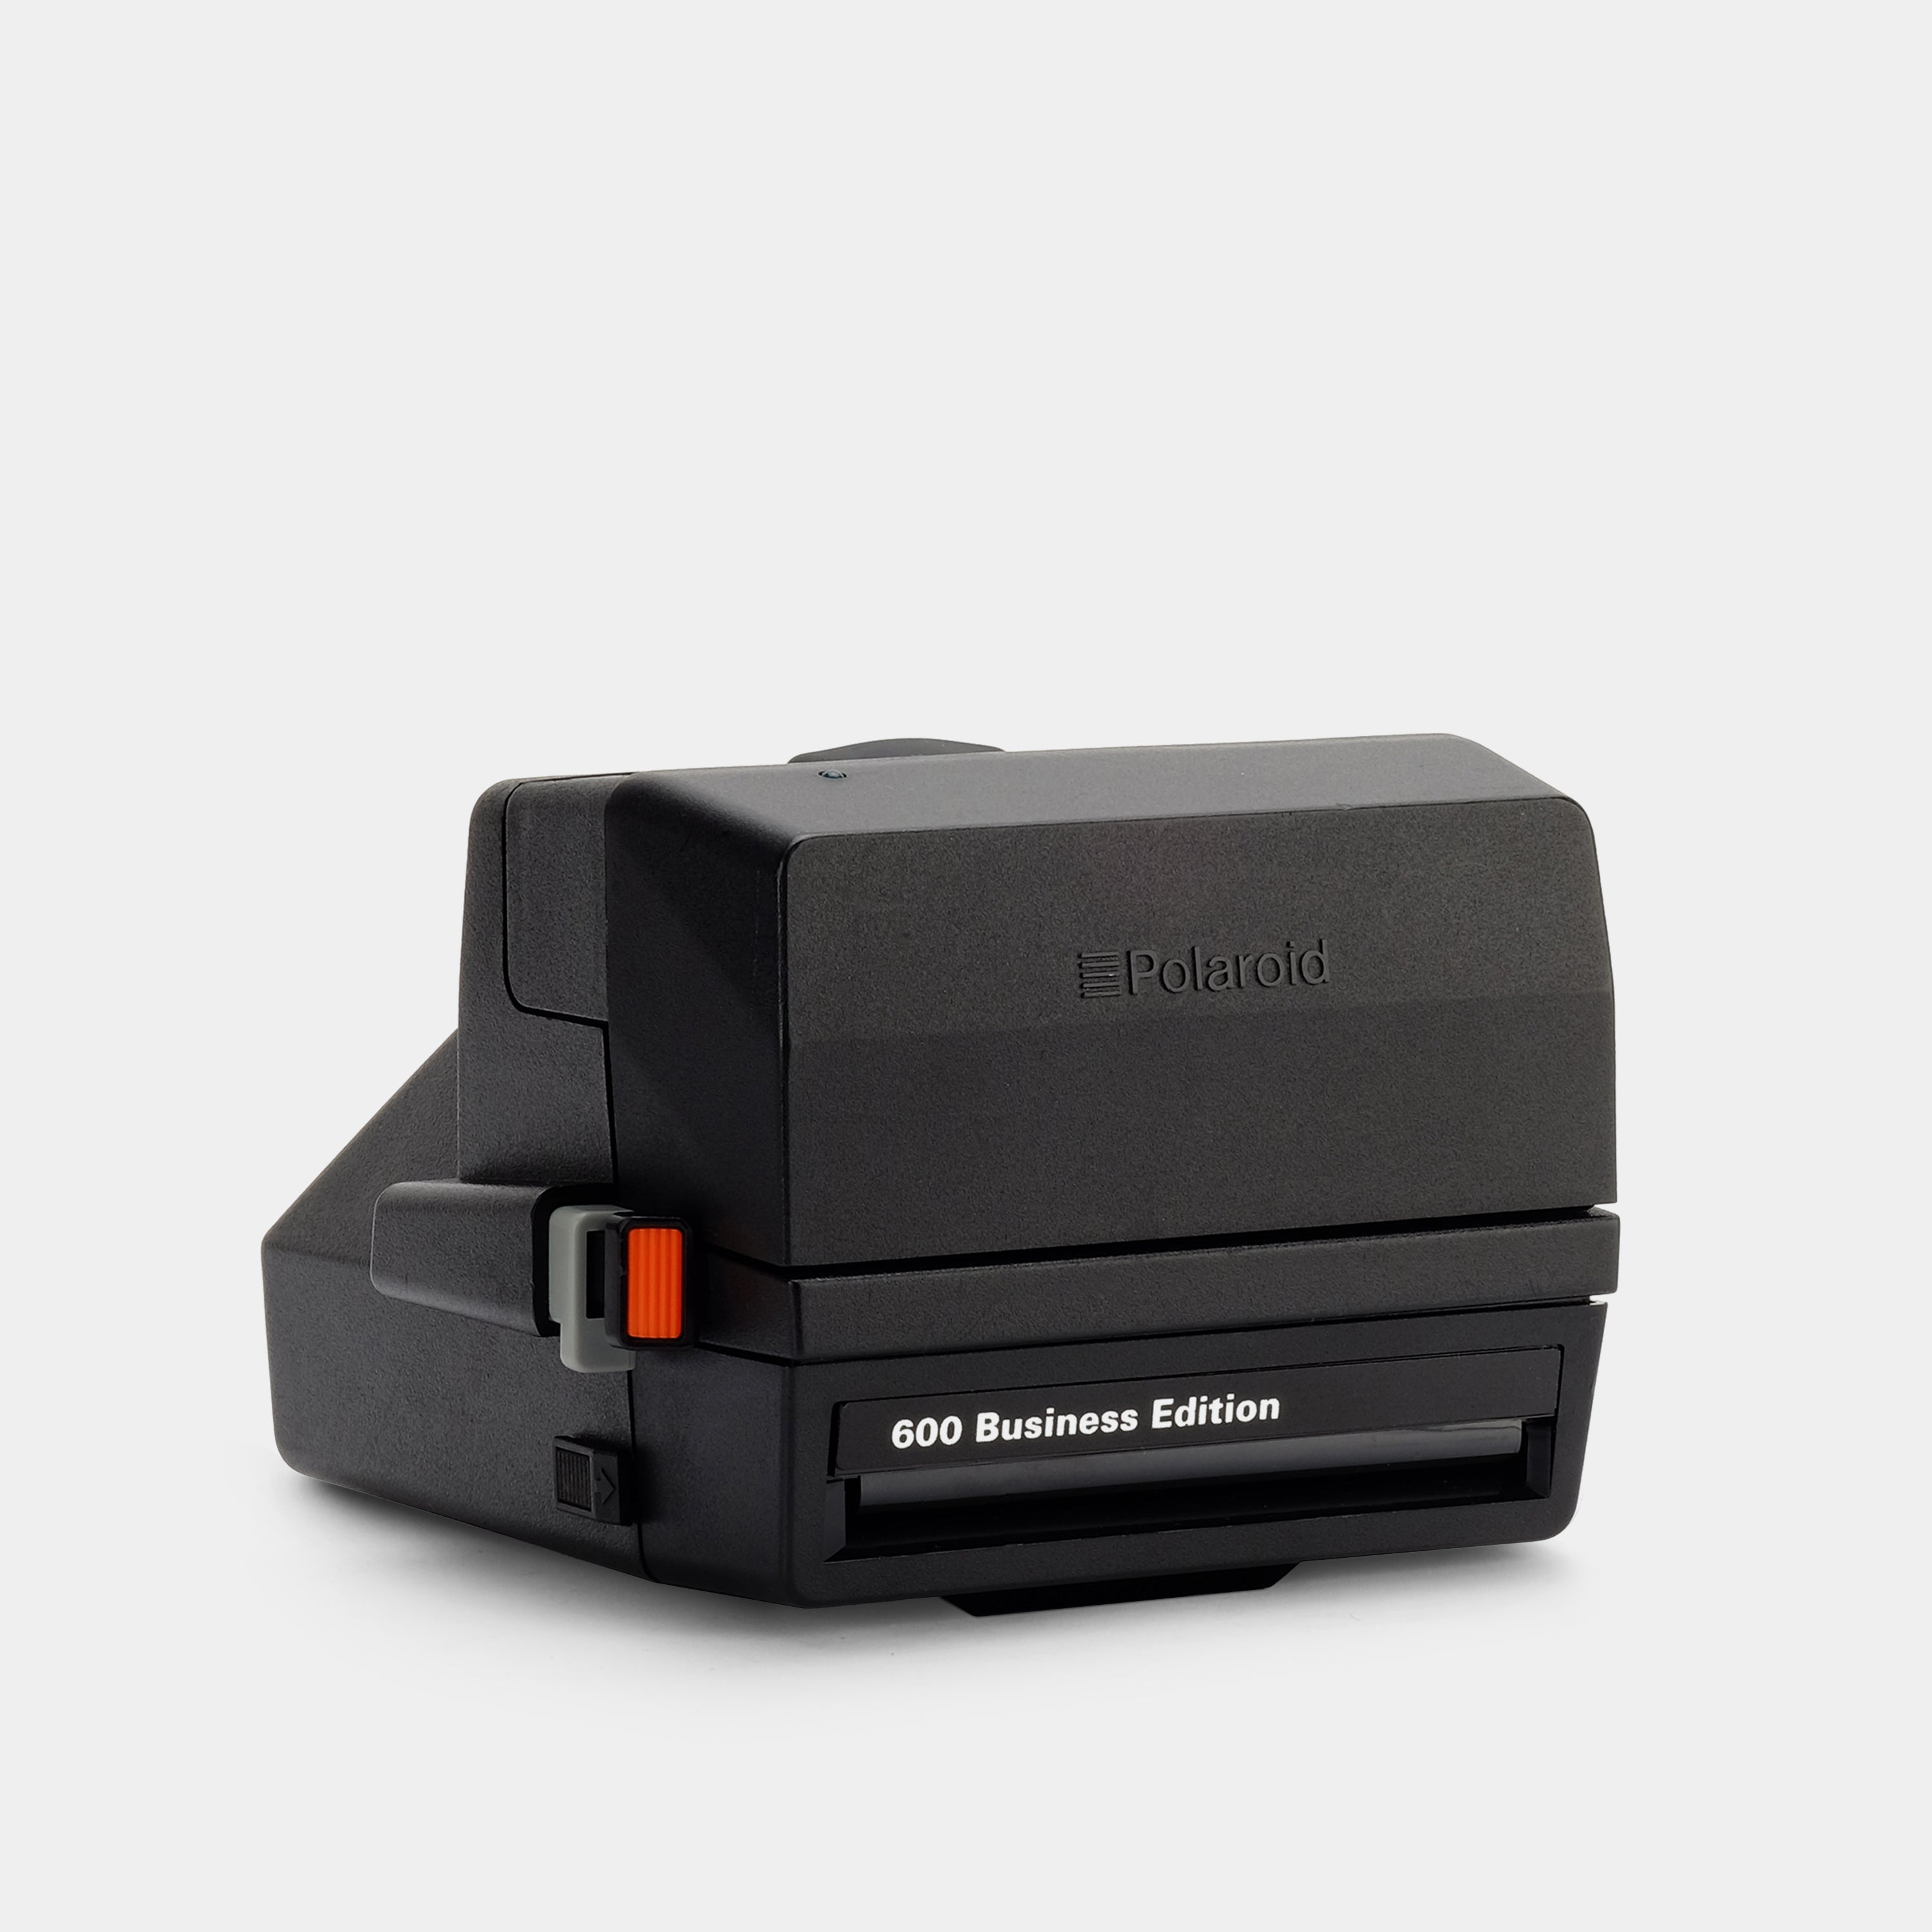 Polaroid 600 Business Edition Instant Film Camera